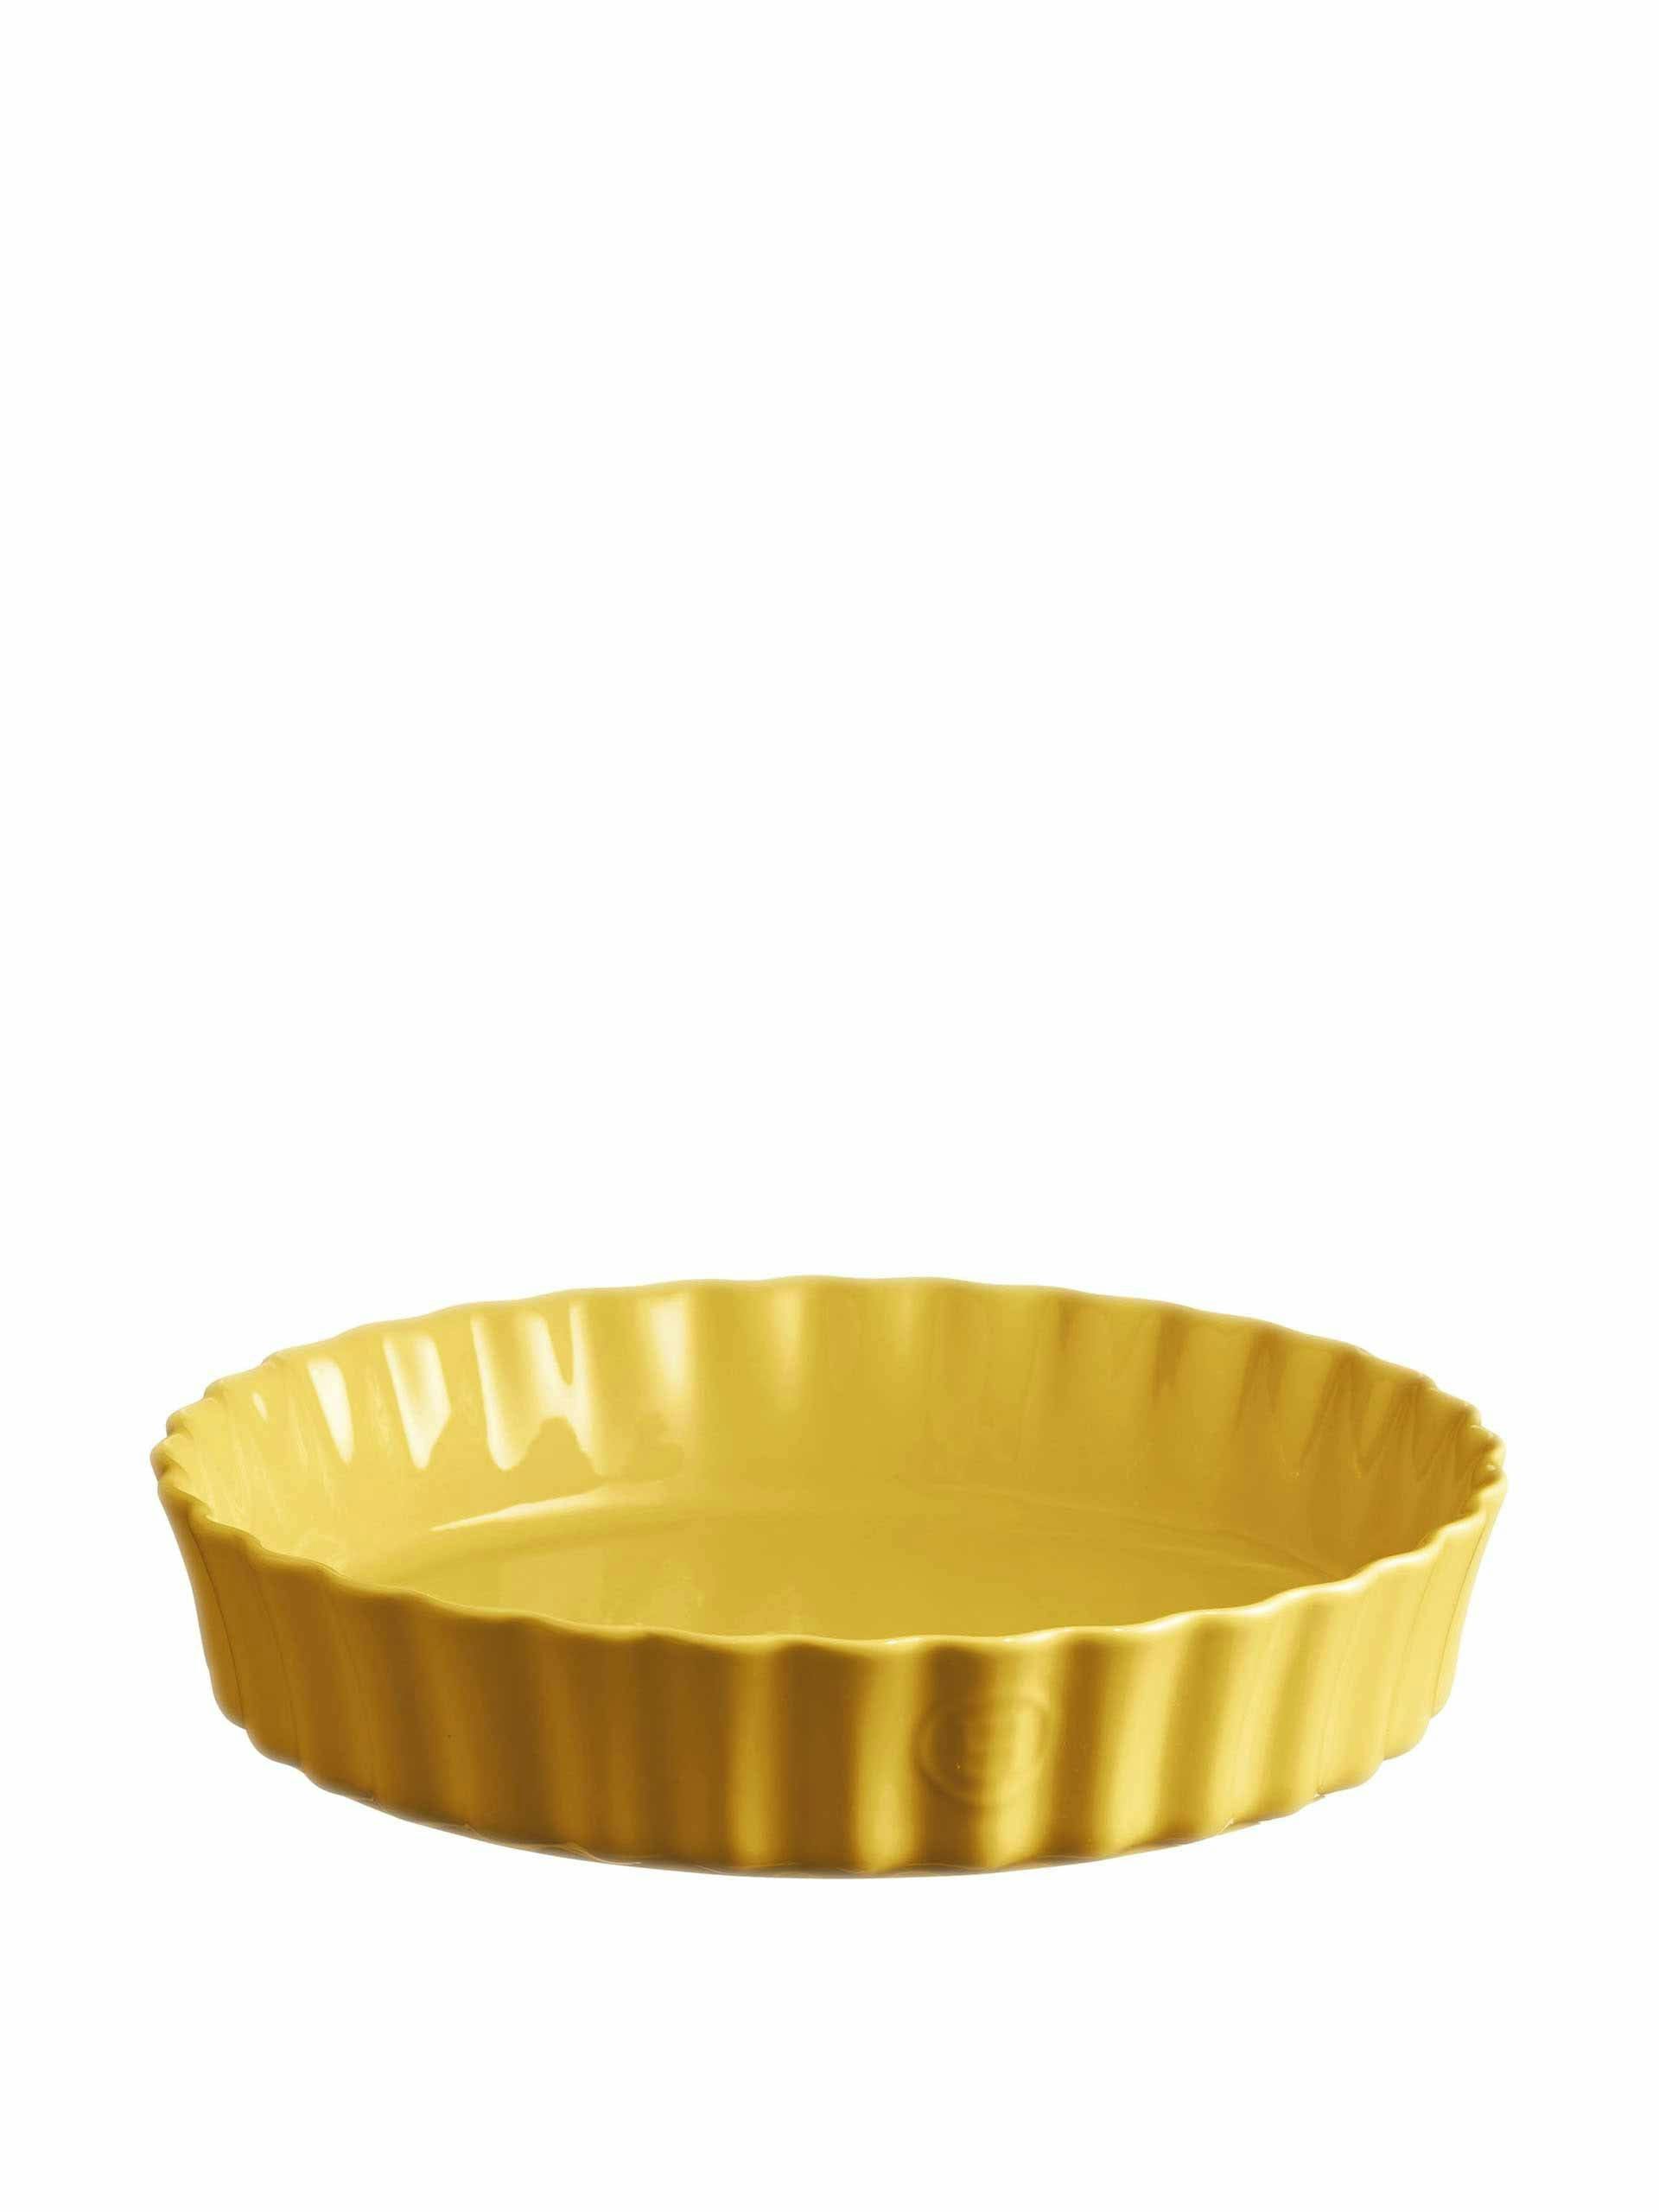 Yellow baking dish